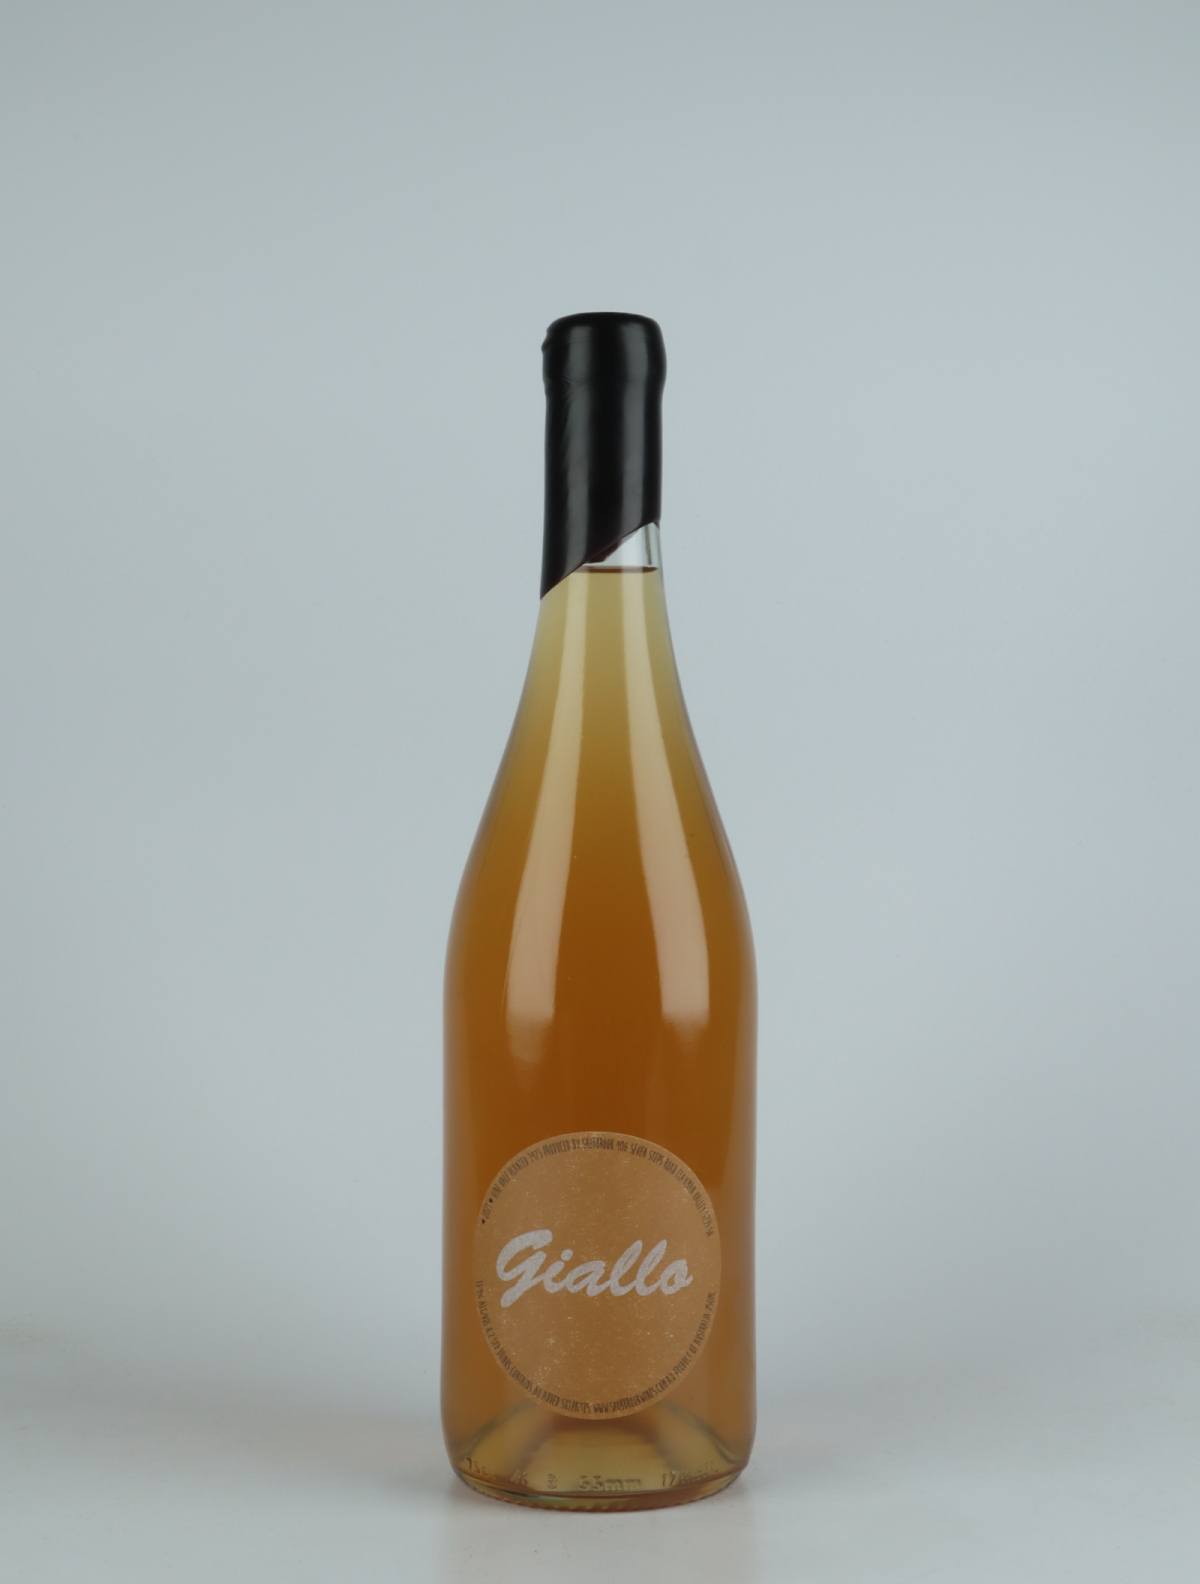 A bottle 2021 Giallo Orange wine from Tom Shobbrook, Barossa Valley in Australia